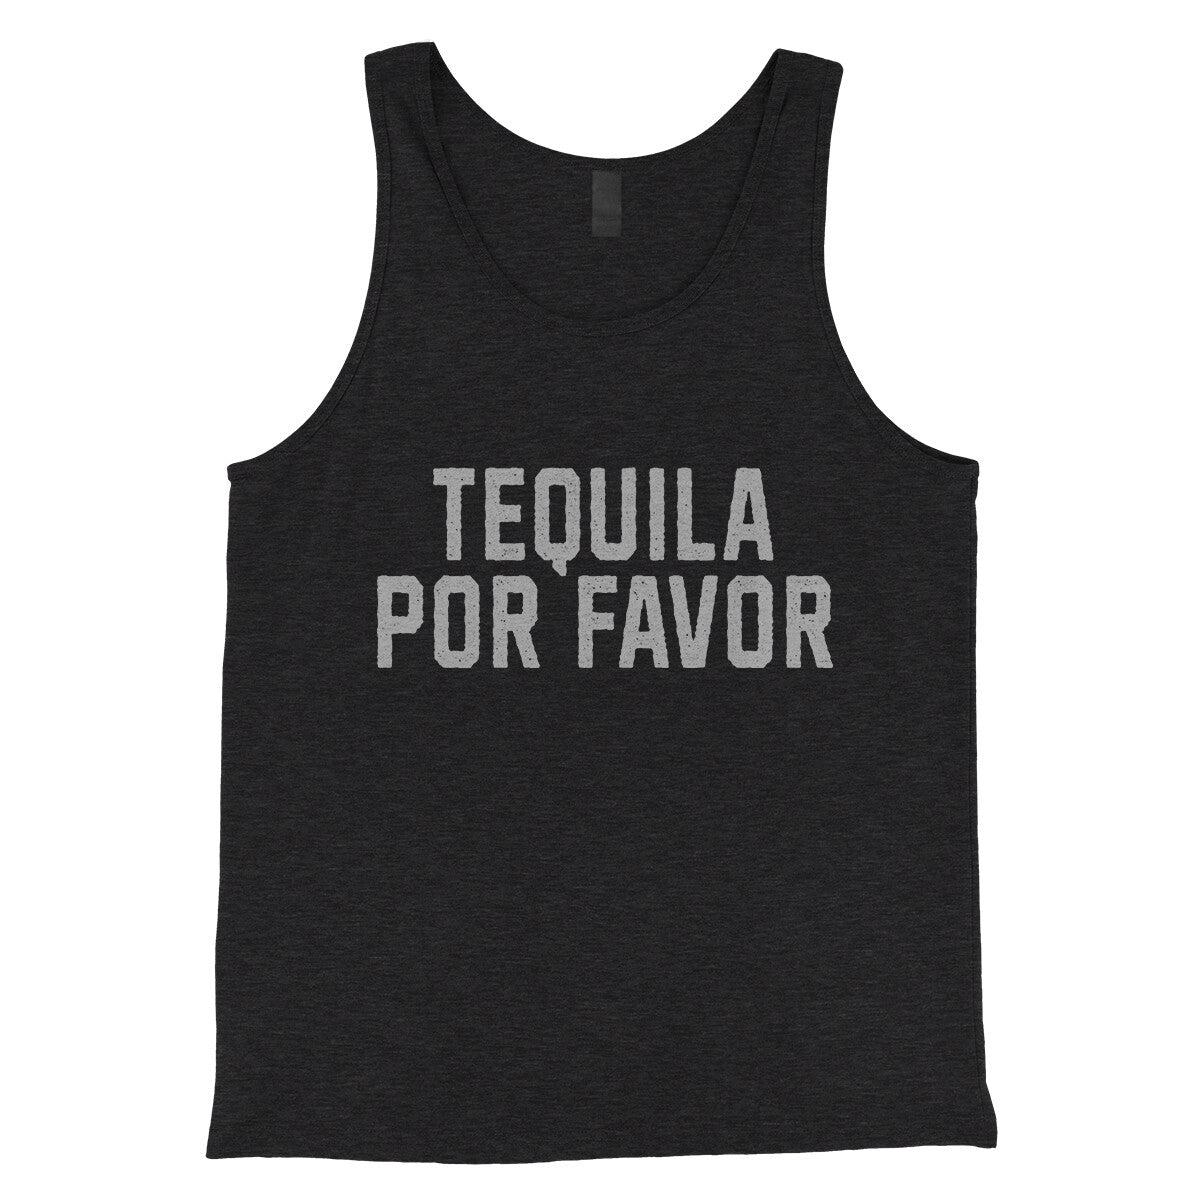 Tequila Por Favor in Charcoal Black TriBlend Color